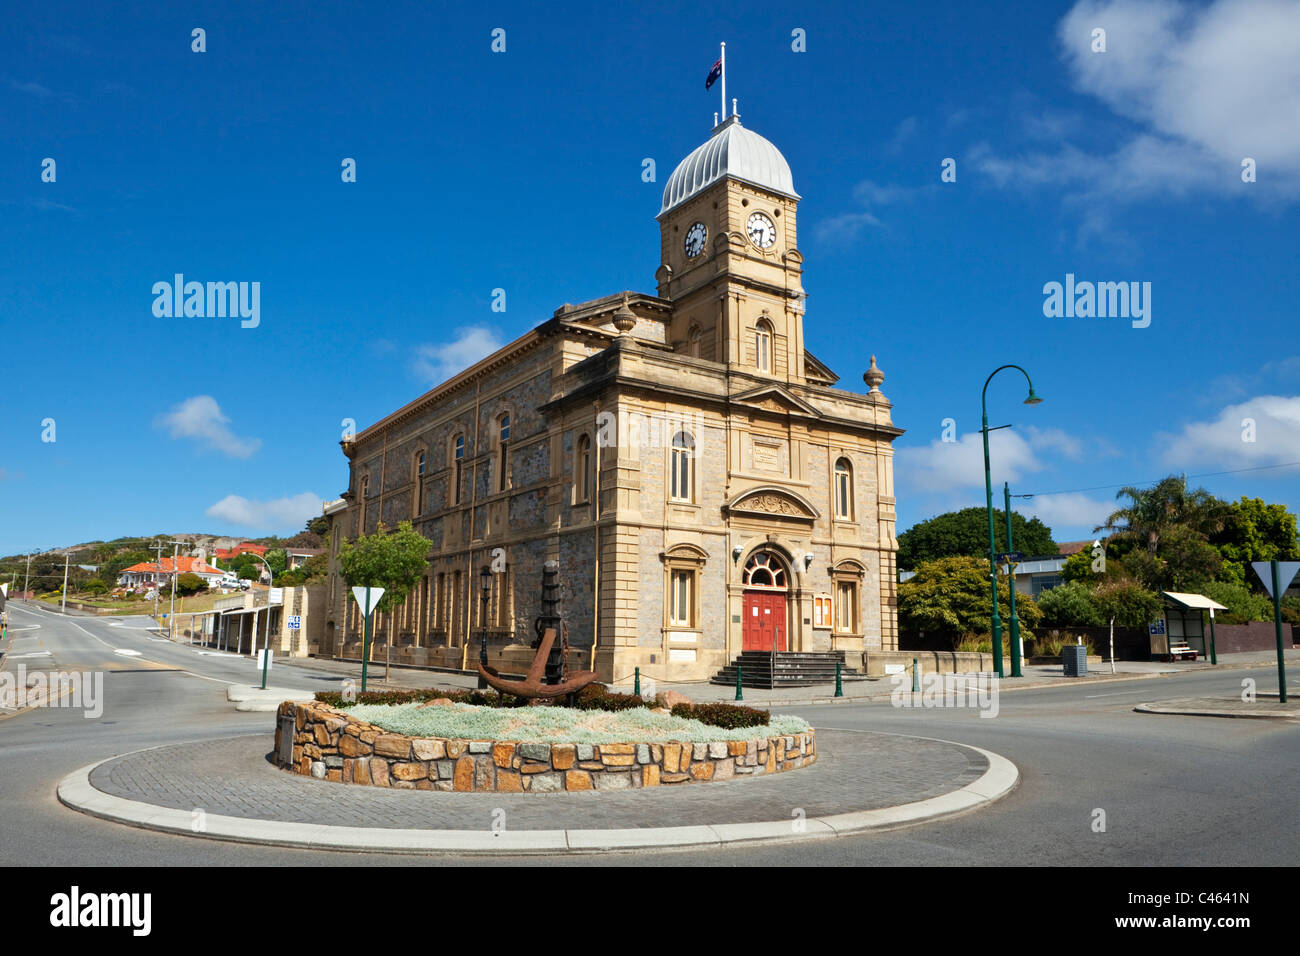 The historic Albany Town Hall, dating back to 1888. Albany, Western Australia, Australia Stock Photo